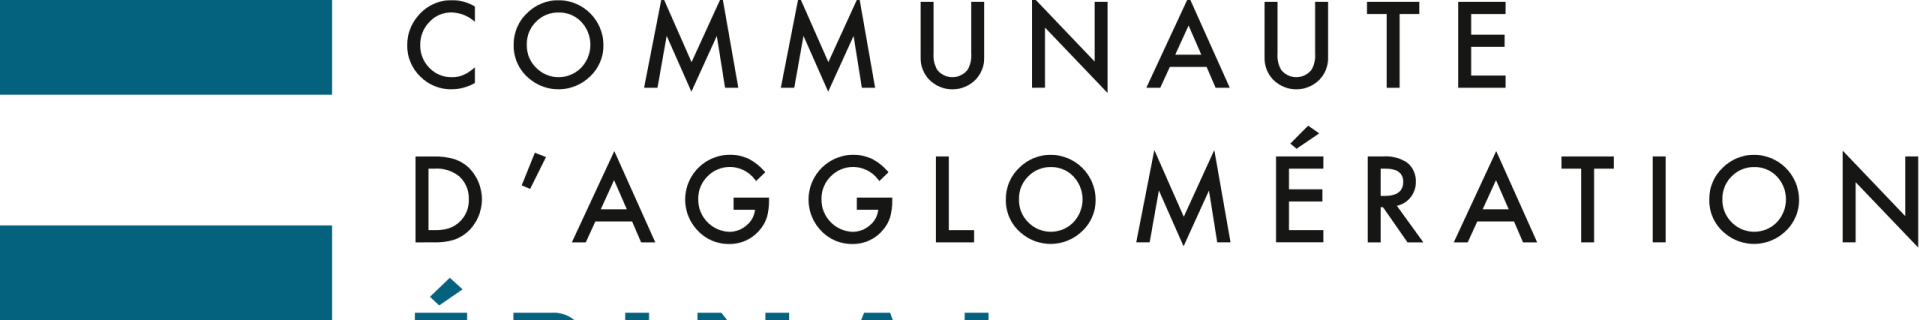 Communaute dagglomeration dEpinal logo.svg